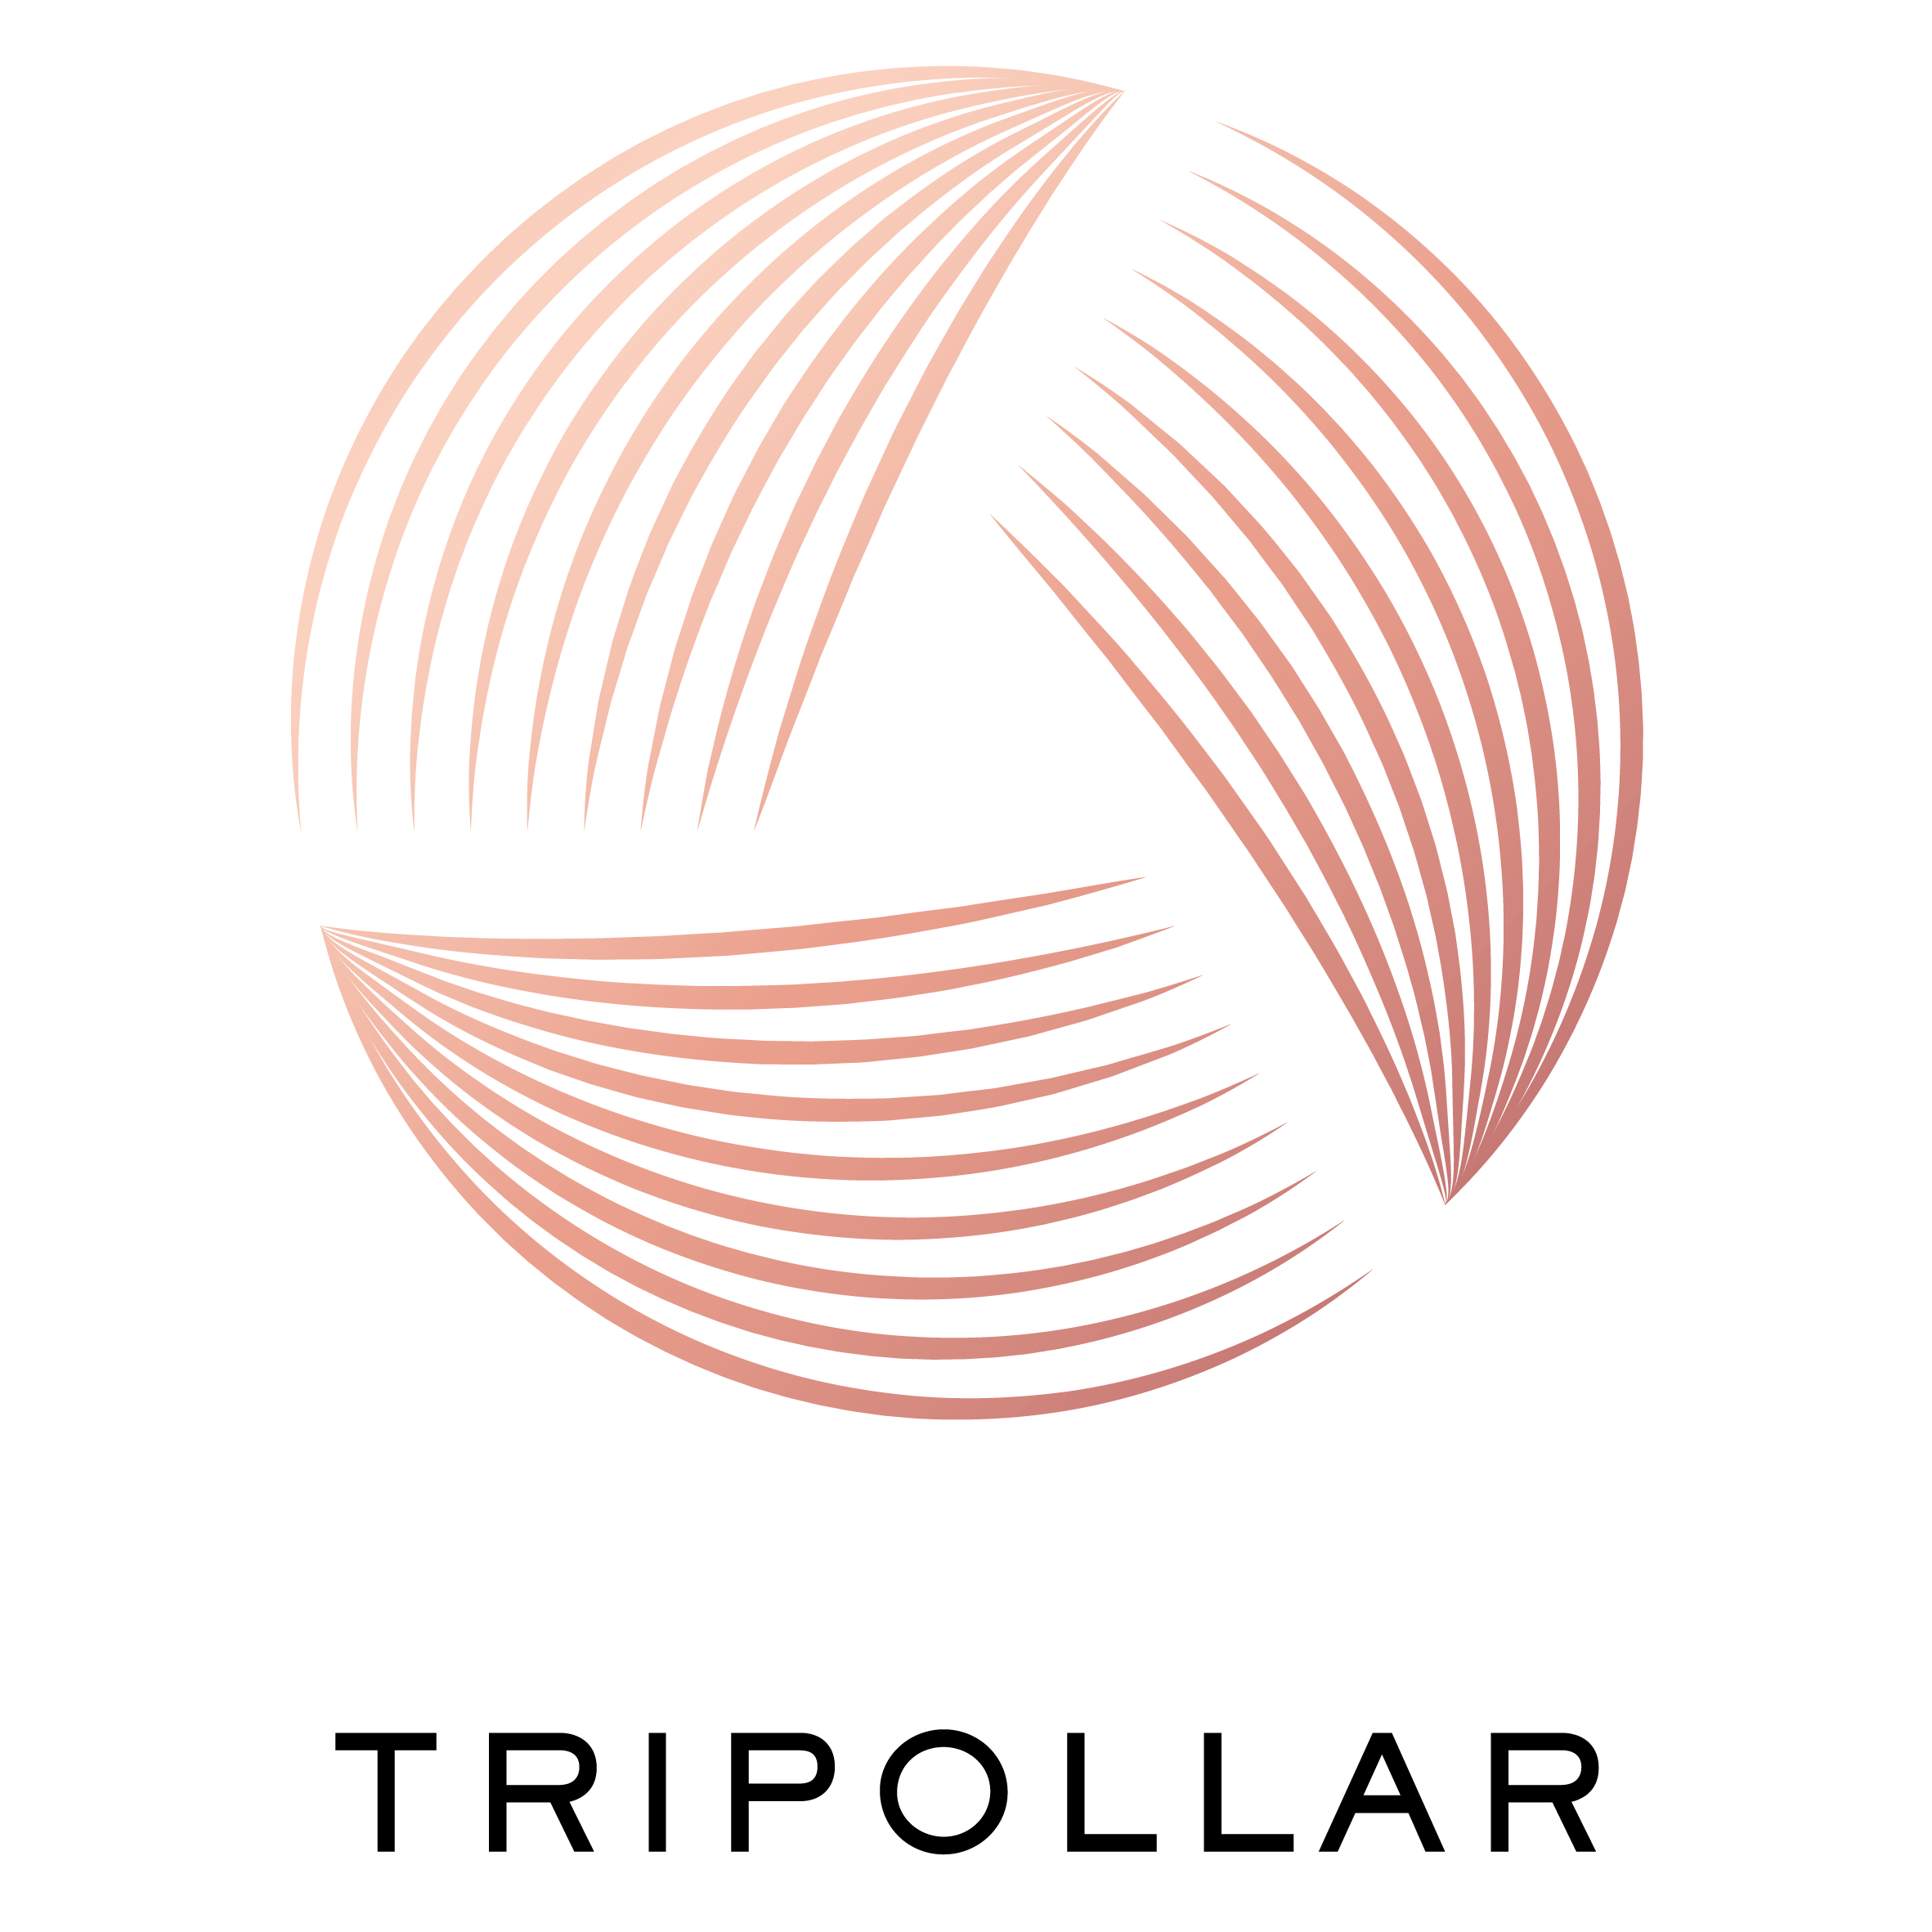 Tripollar logo